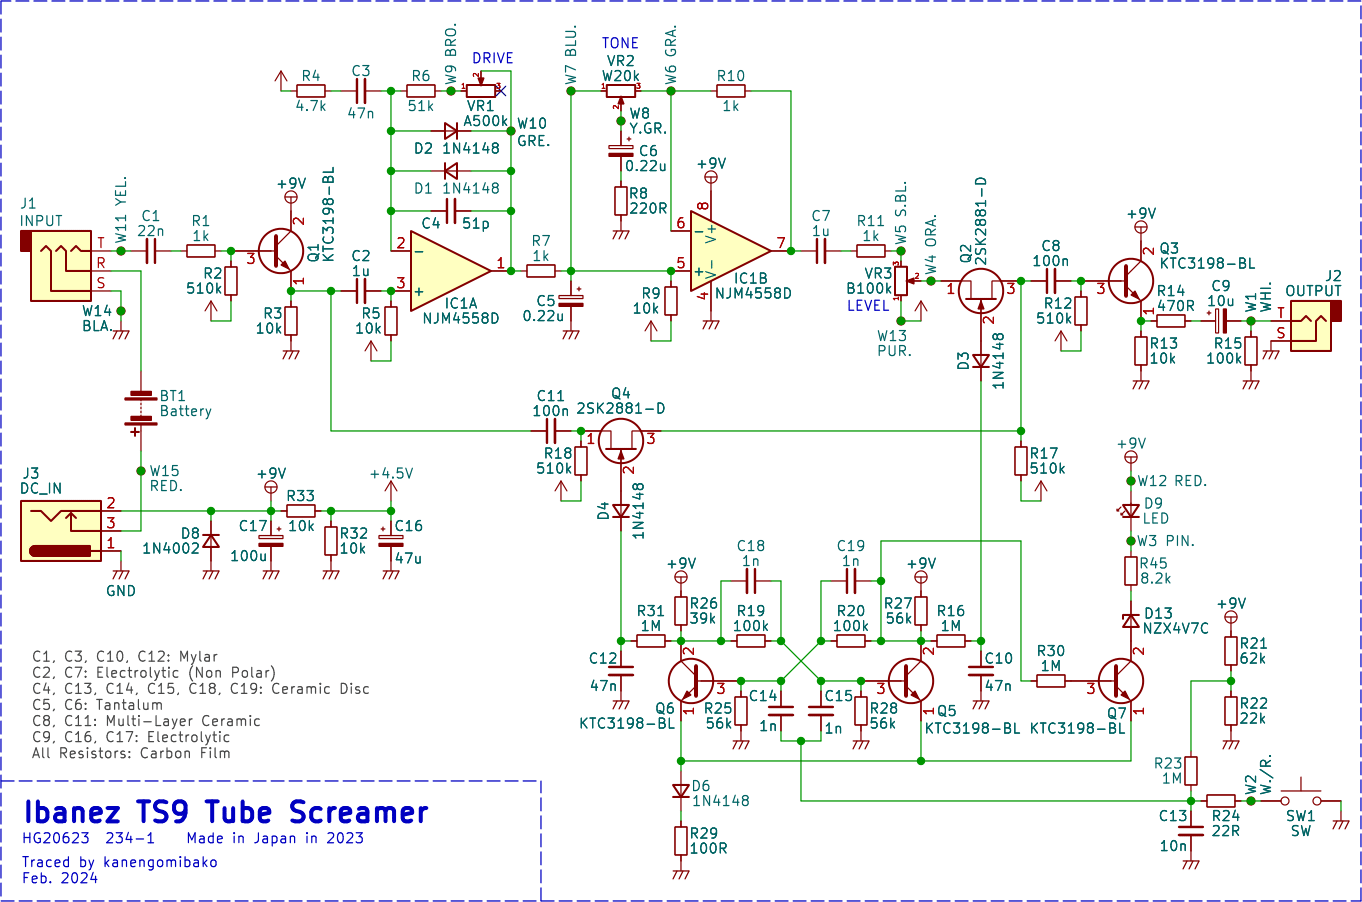 Ibanez Tube Screamer TS9 Schematic